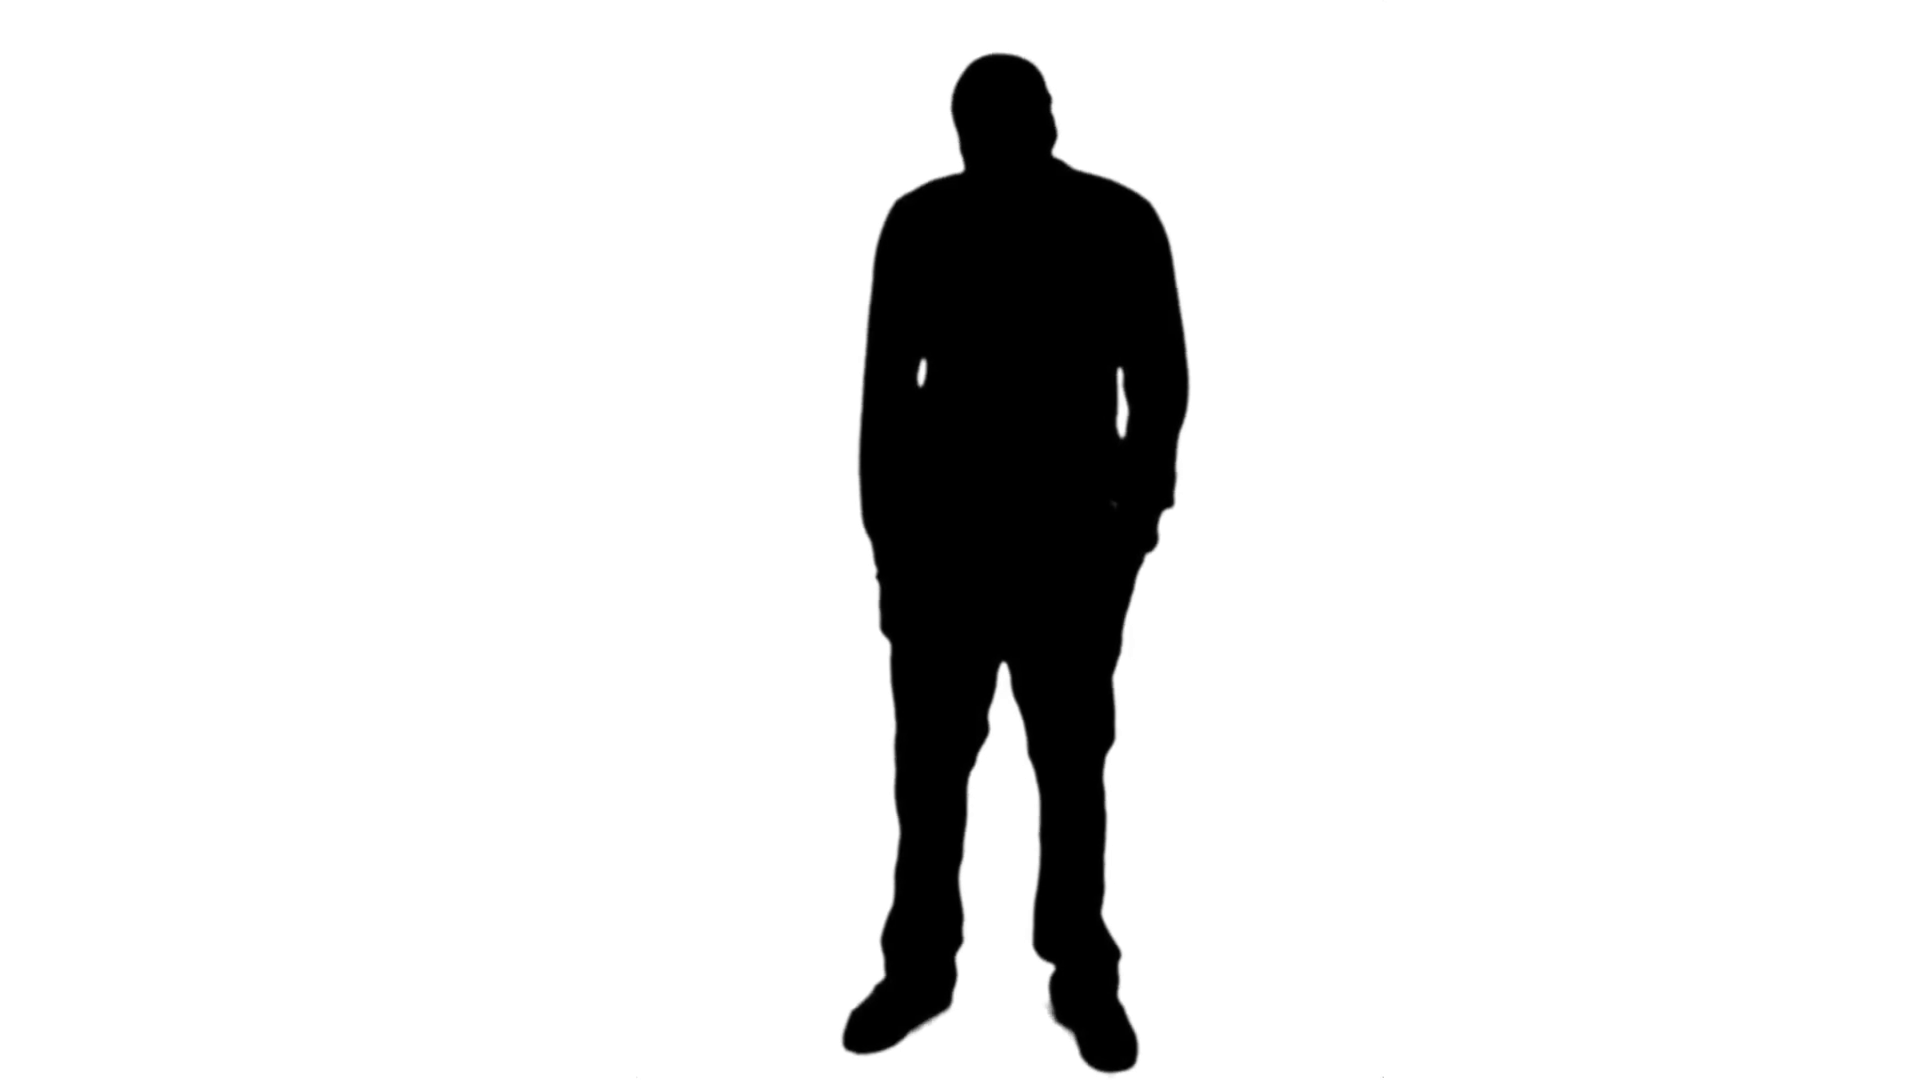 Sad man silhouette - 1080p Motion Background - Videoblocks